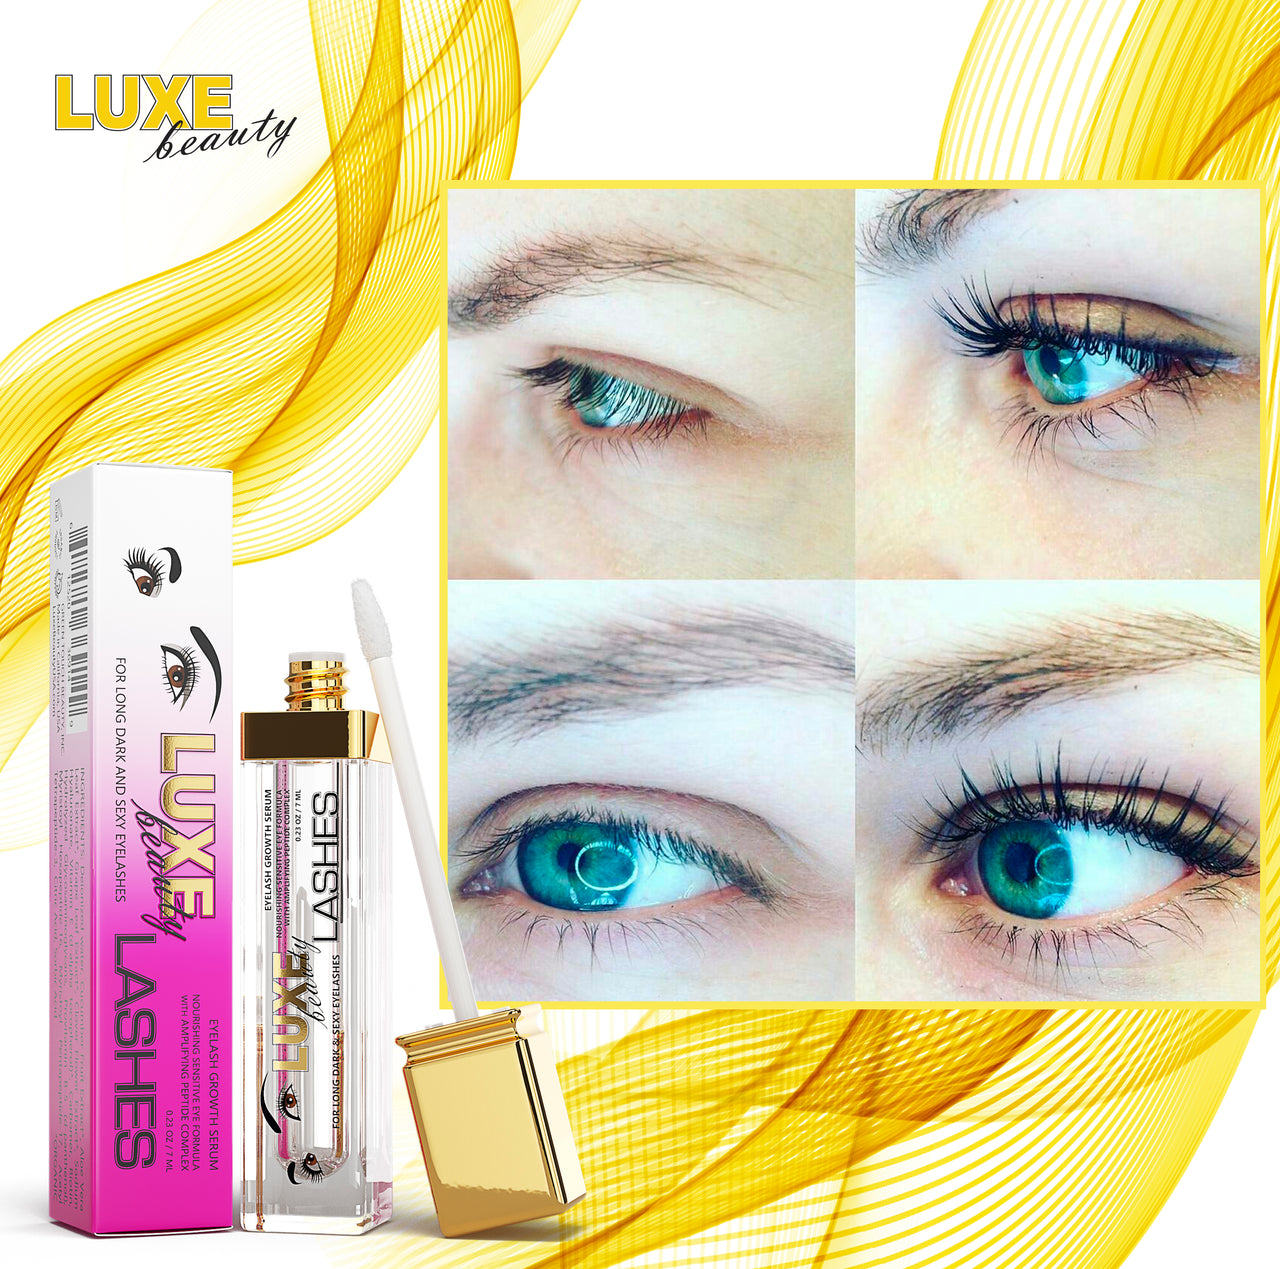 LUXE BEAUTY LASHES™ Nourishing Sensitive Eye Formula for Darker Longer Lashes